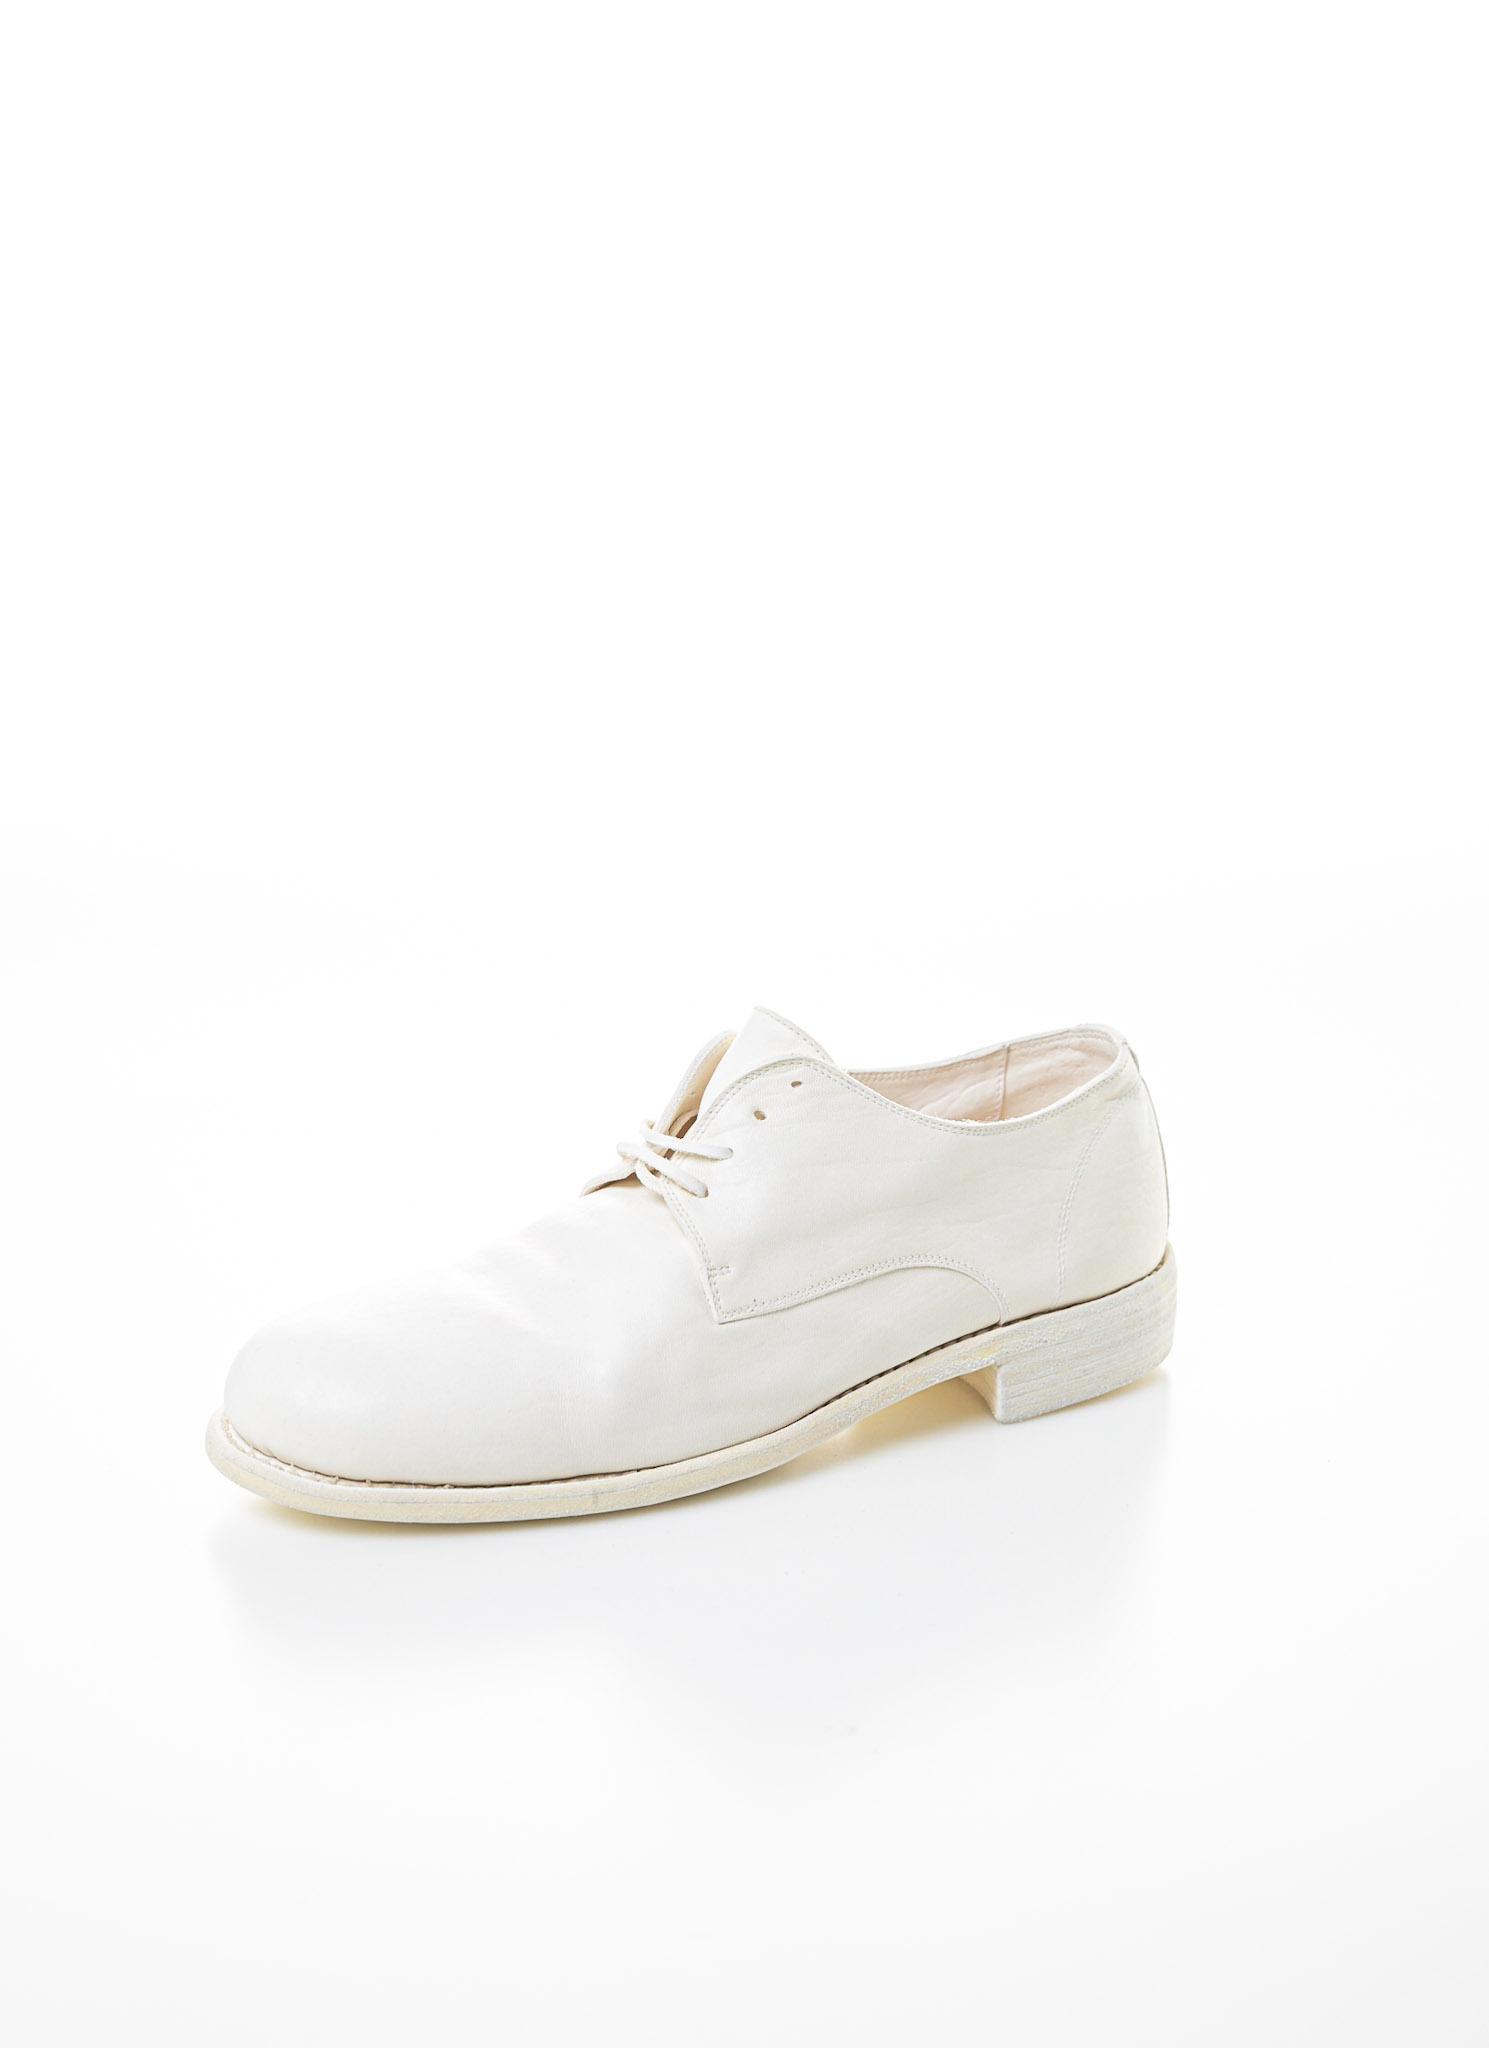 hide-m | GUIDI 992, Classic Derby Shoe white CO00T horse leather